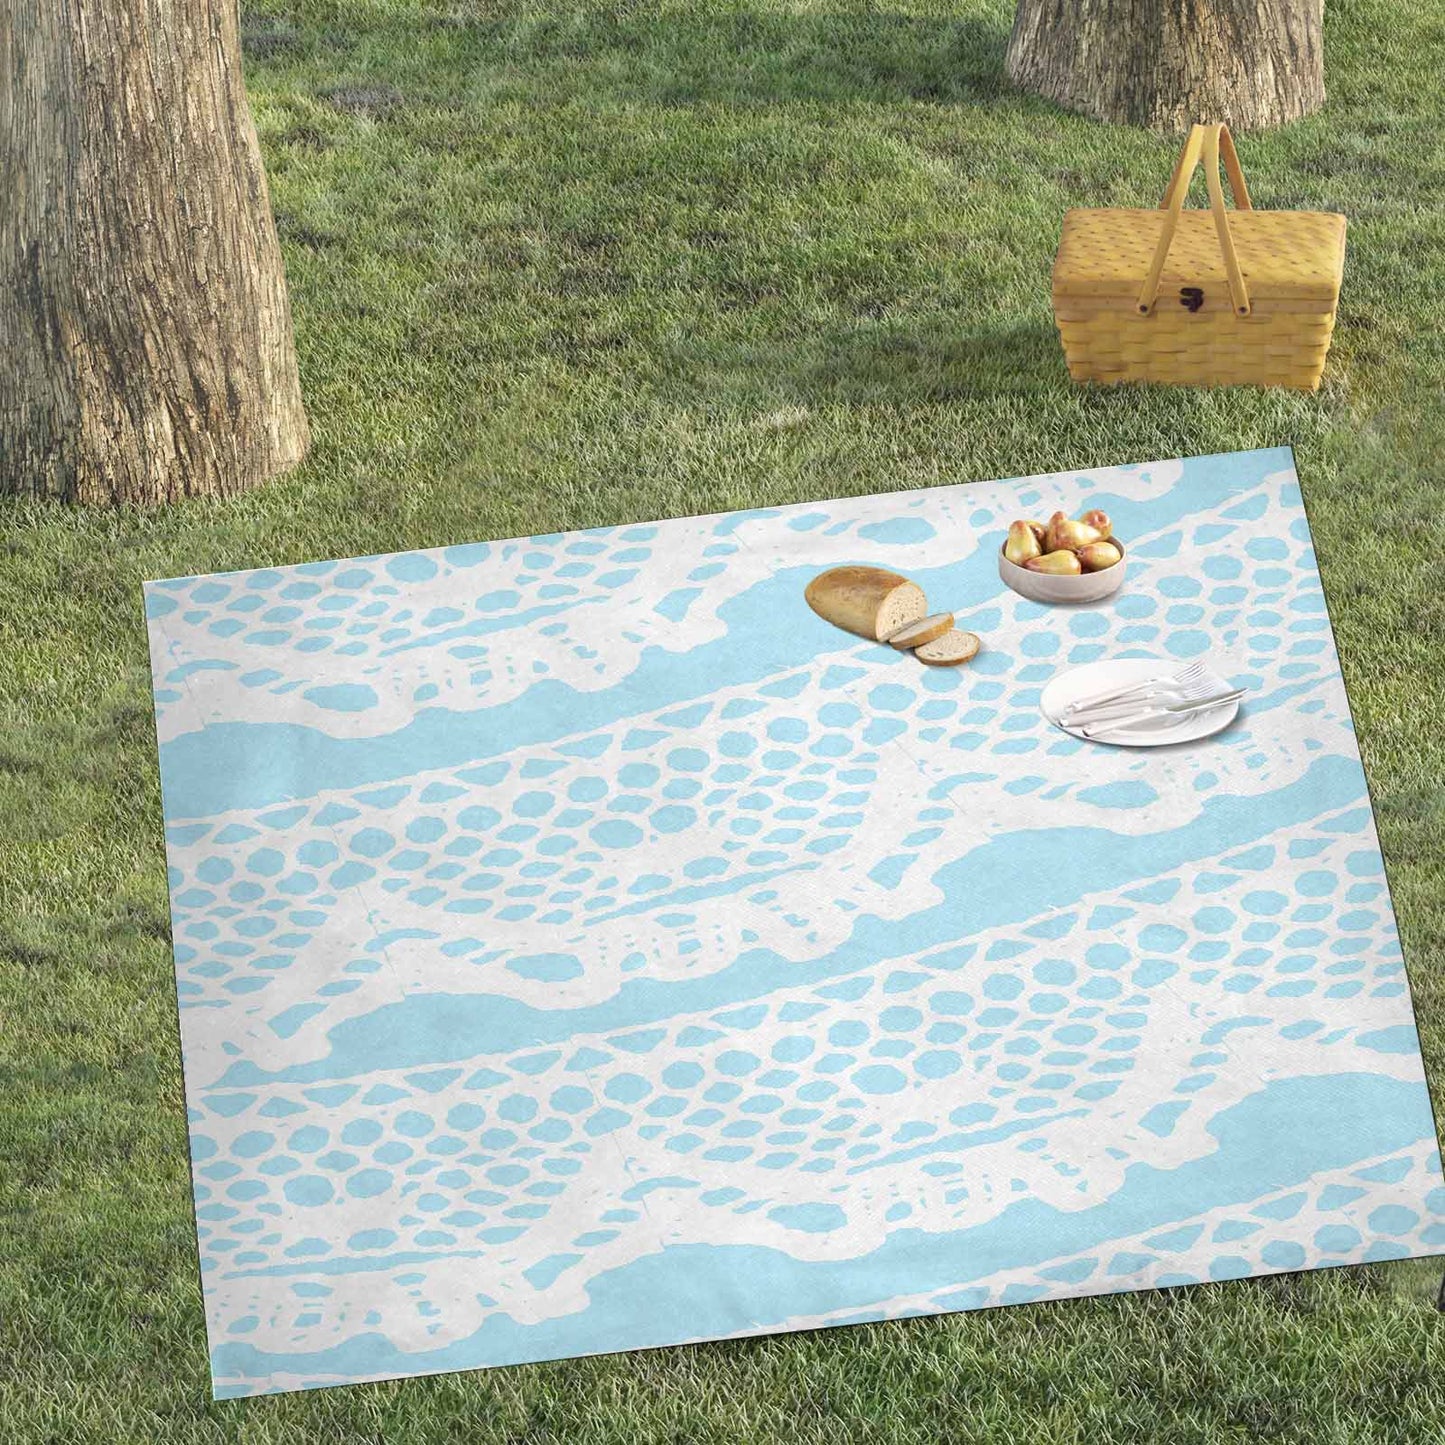 Victorian lace print waterproof picnic mat, 69 x 55in, design 08